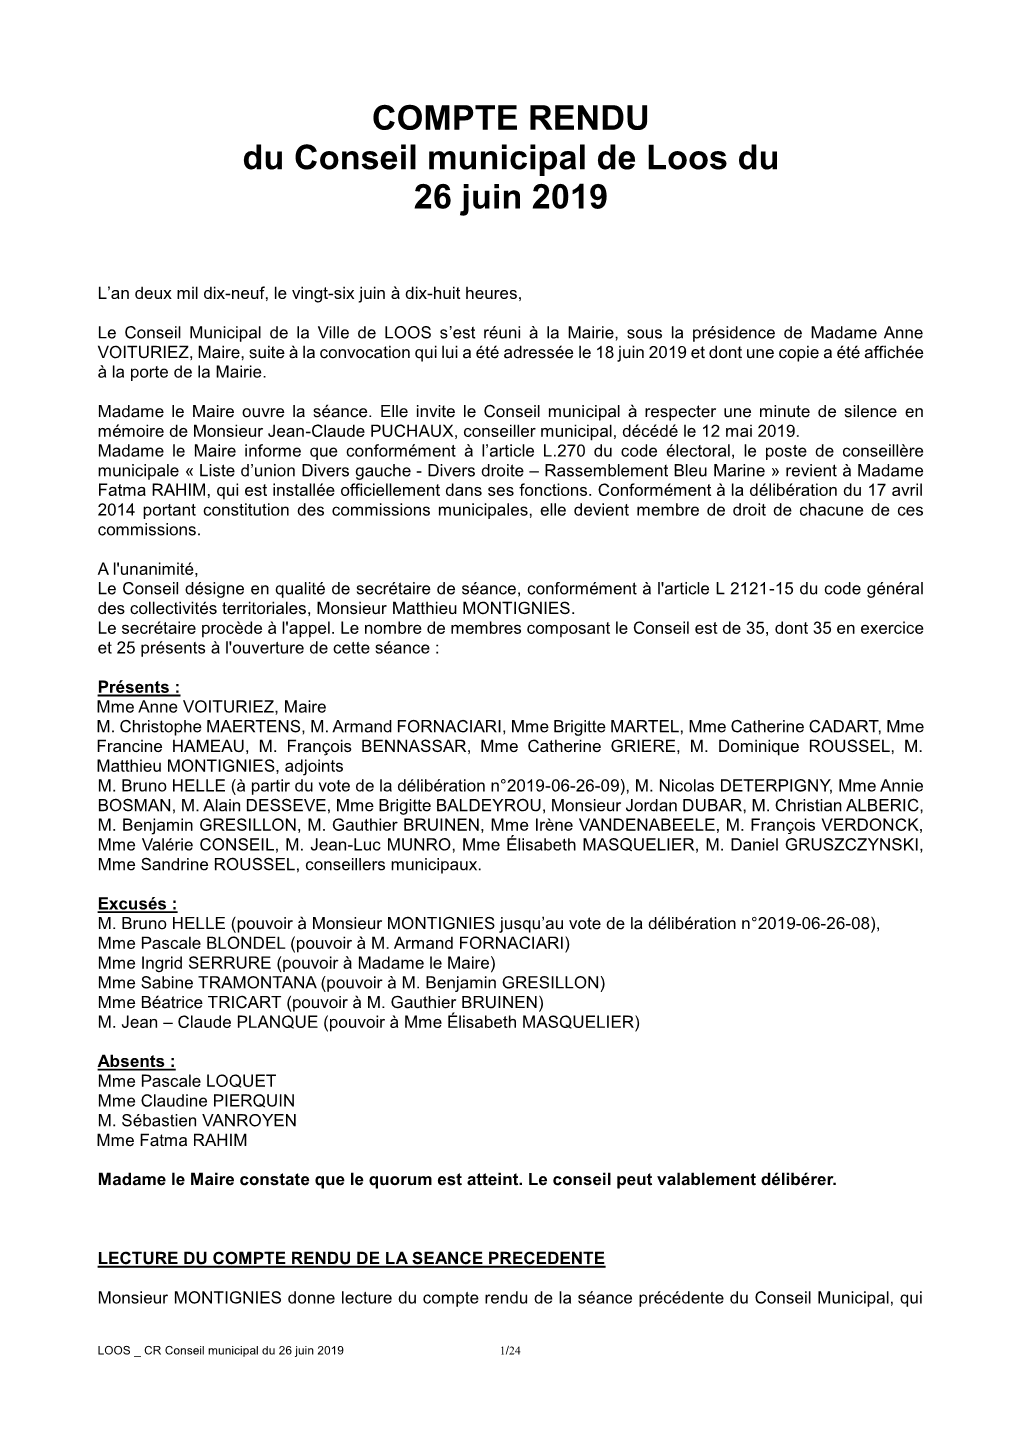 COMPTE RENDU Du Conseil Municipal De Loos Du 26 Juin 2019